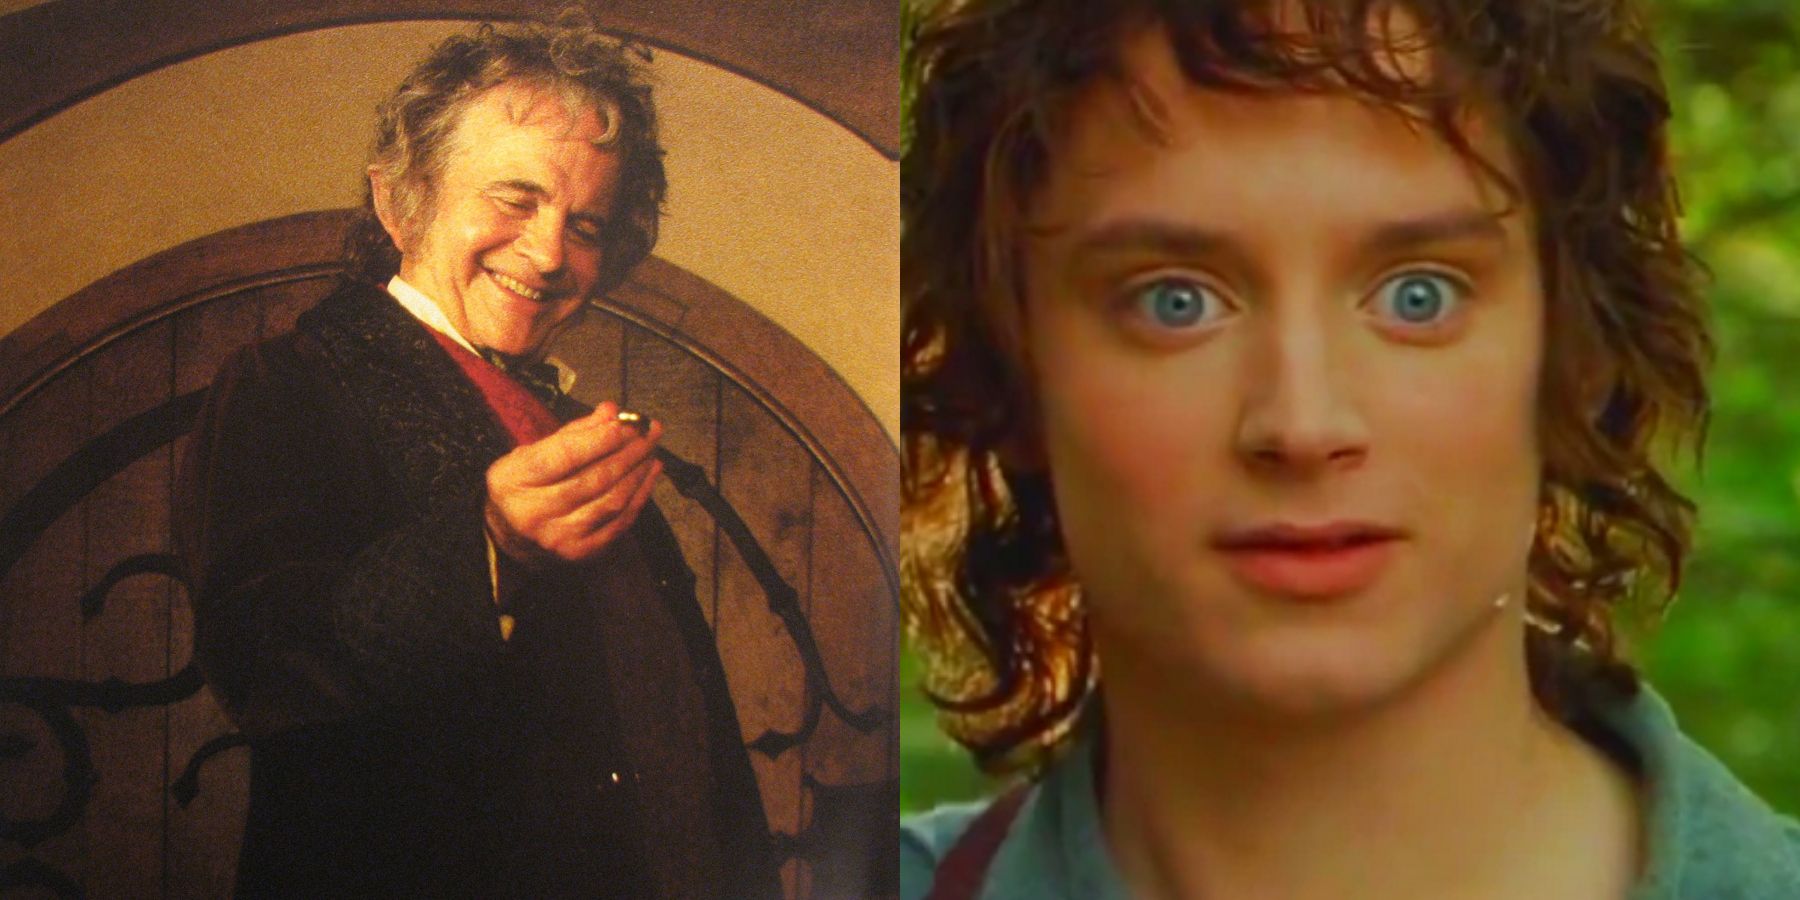 Bilbo Baggins (Ian Holm) and Frodo Baggins (Elijah Wood)  in Lord of the Rings 